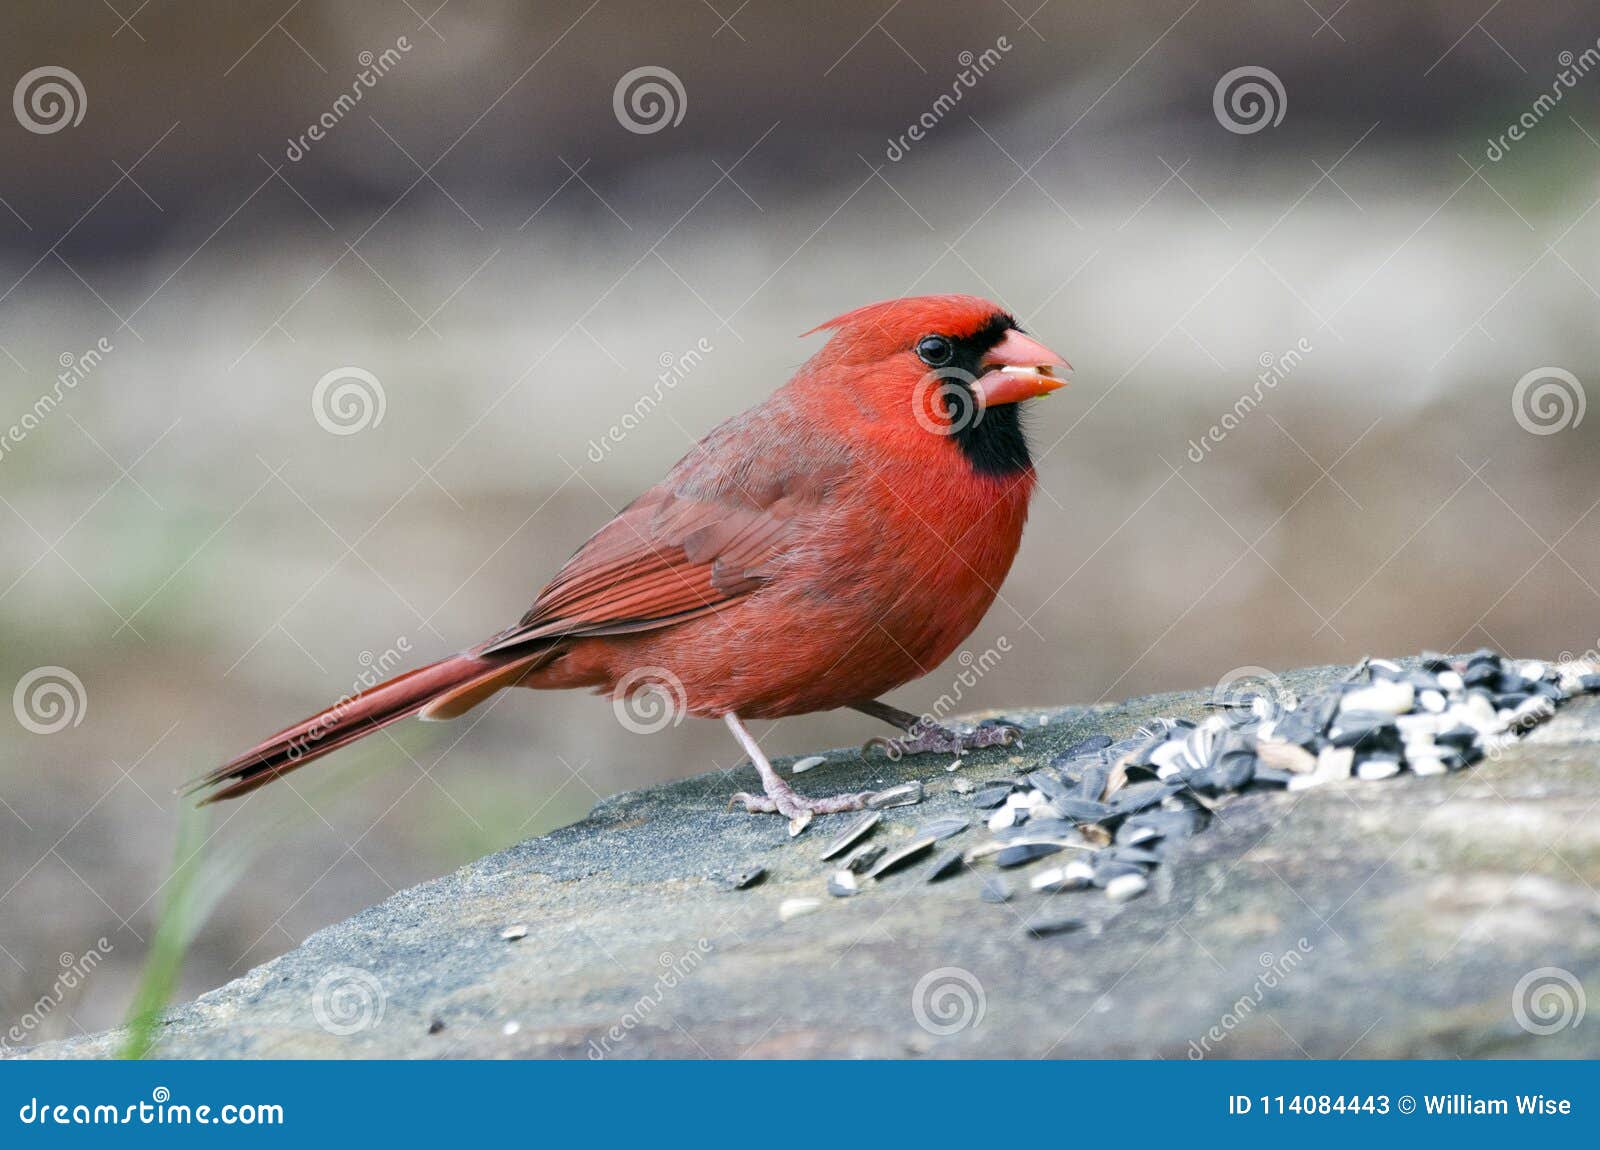 Red Male Cardinal Bird Eating Seed, Athens GA, Stock Image Image of resident, passerina: 114084443